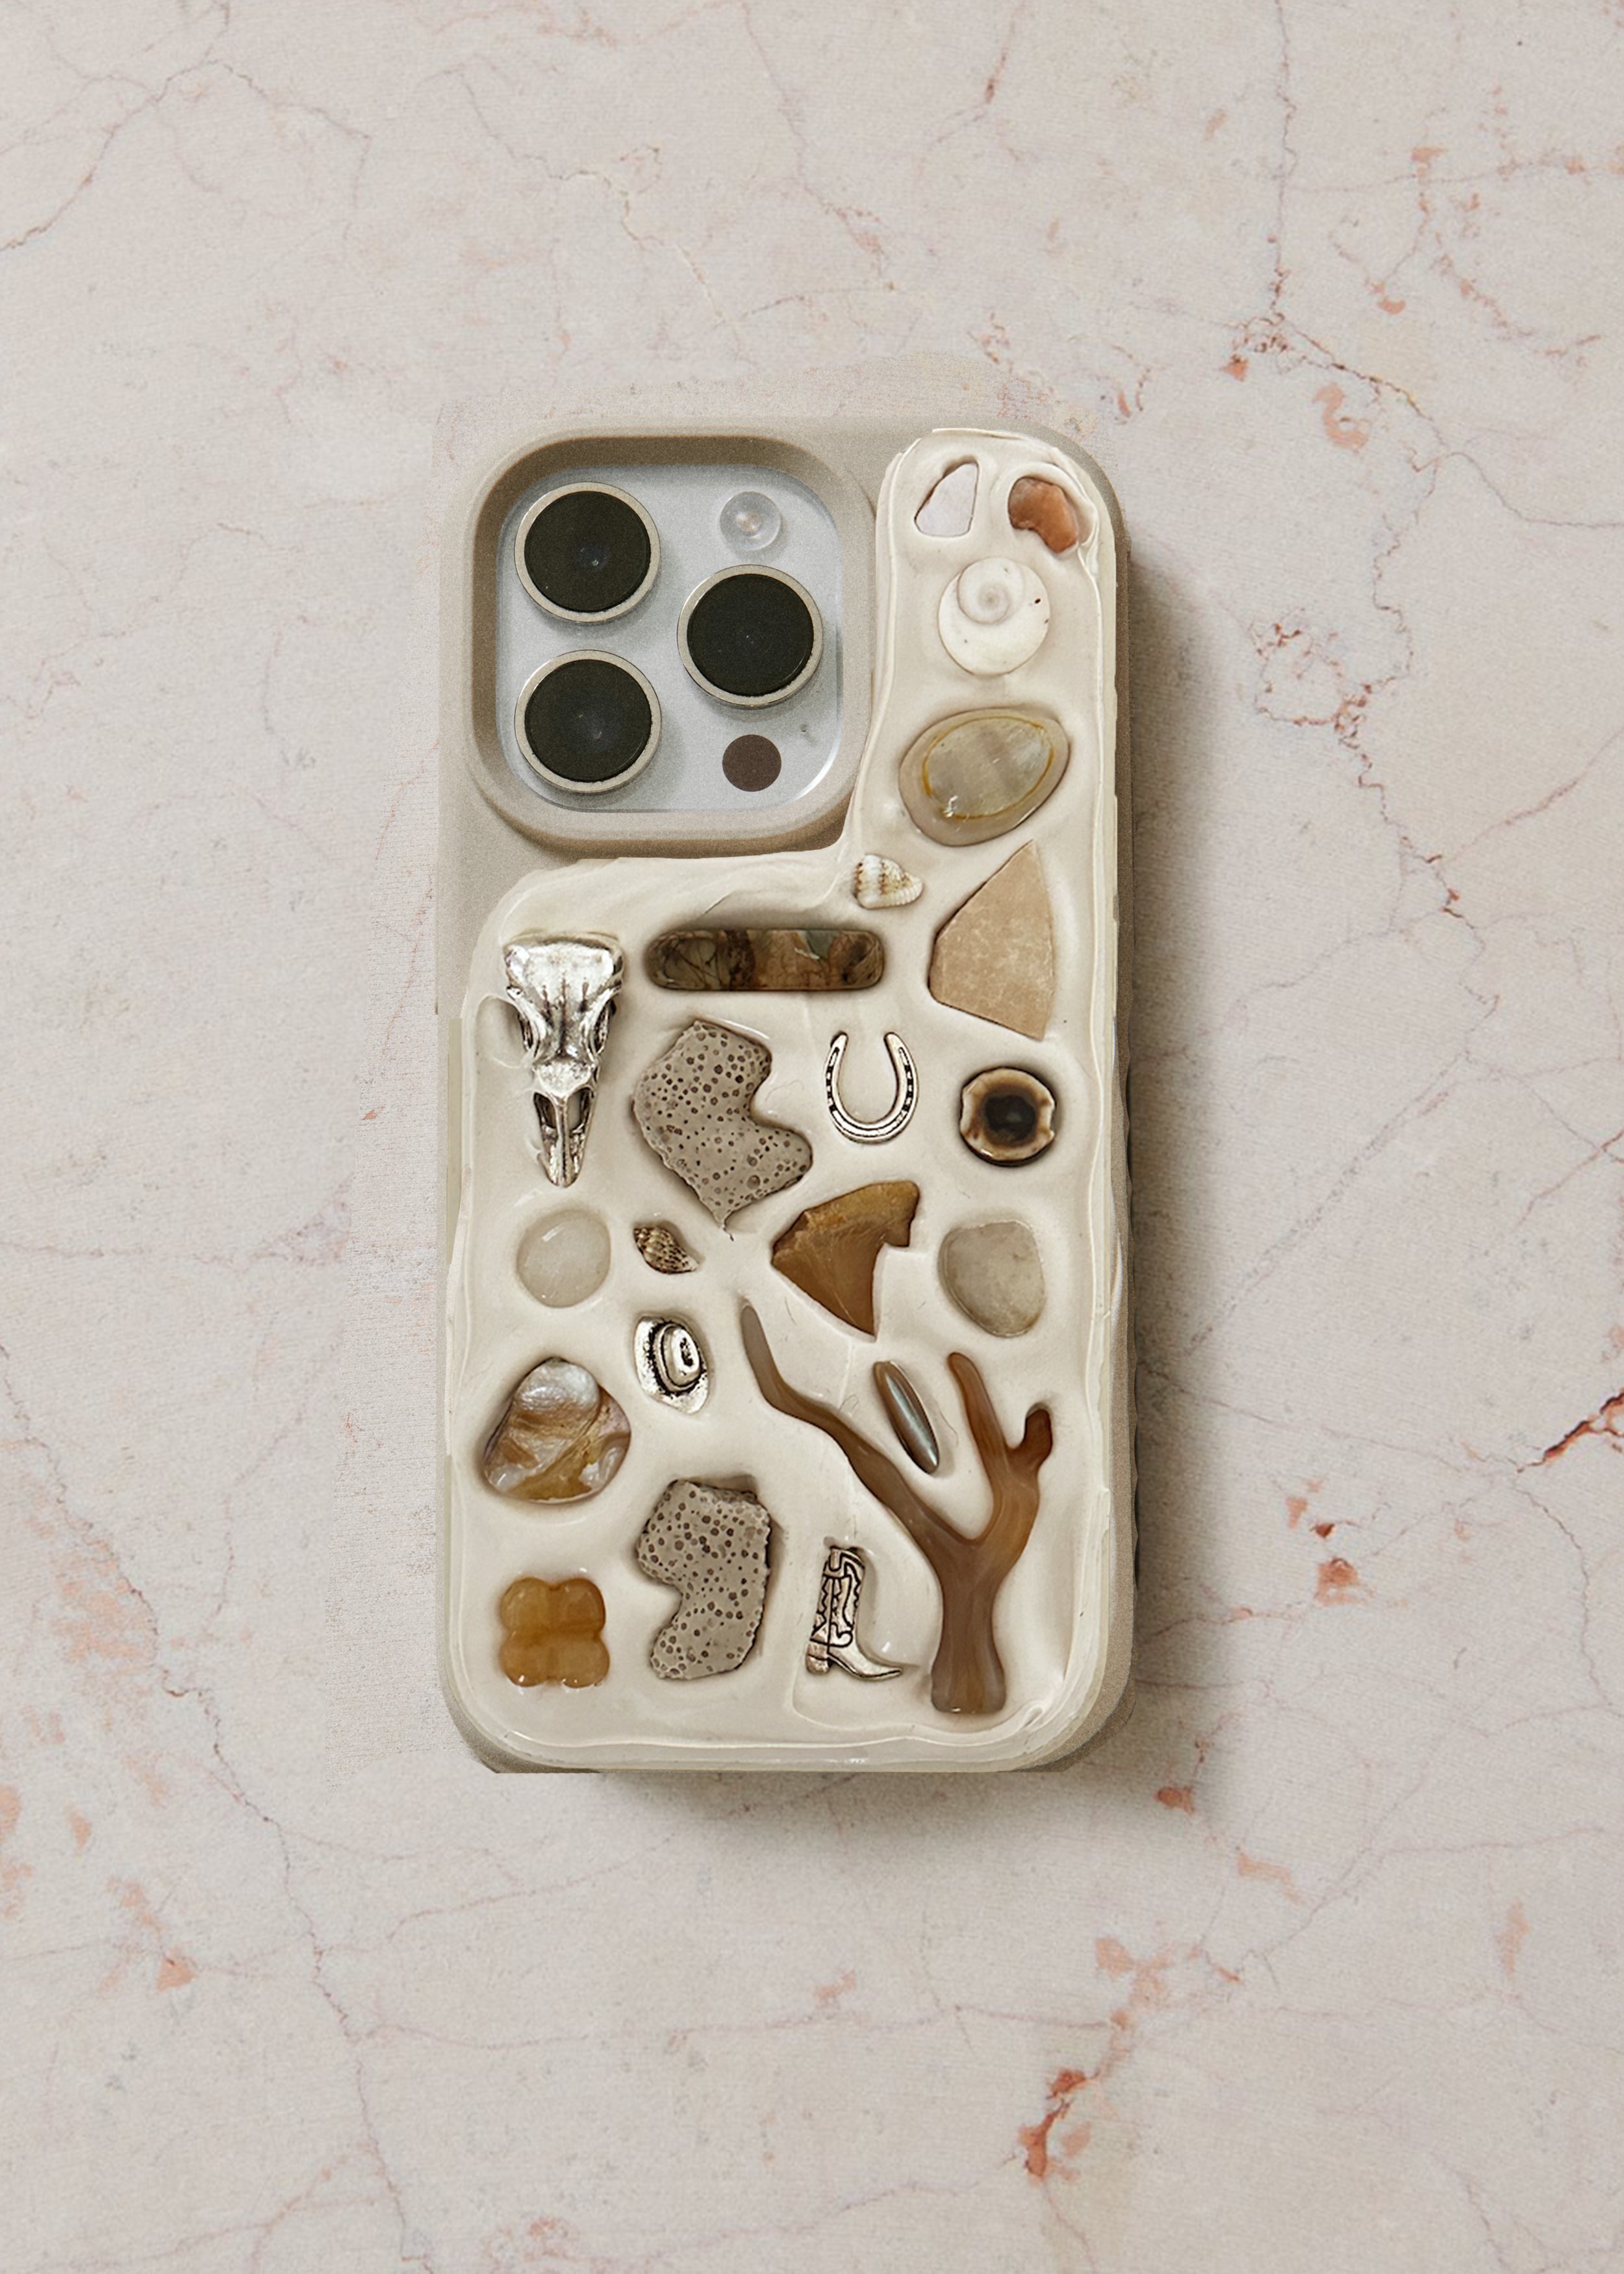 CraftBeast handmade】Phone case DIY kit - Step2: CHARMS – CraftBeast Handmade